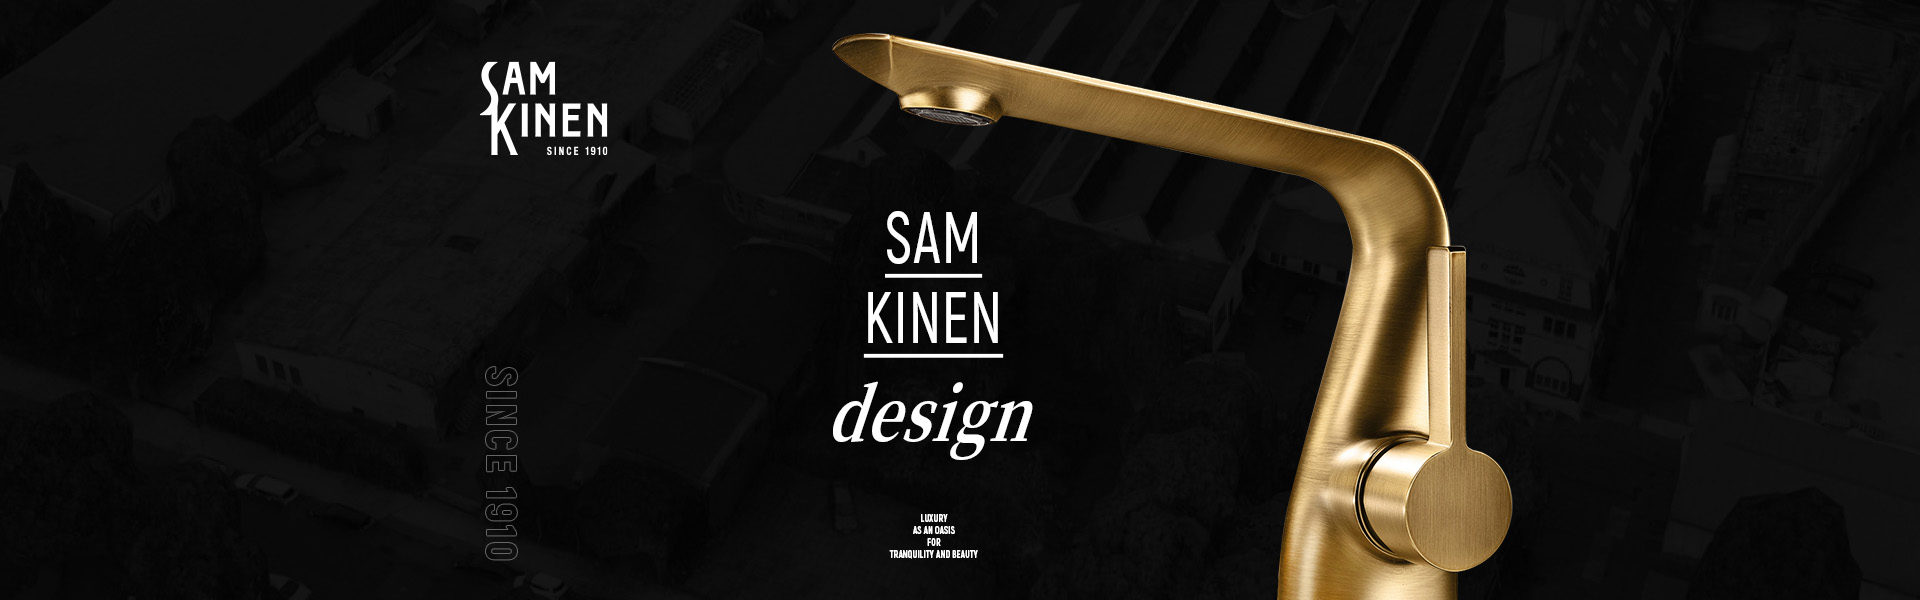 SAM & KINEN视觉形象设计案例